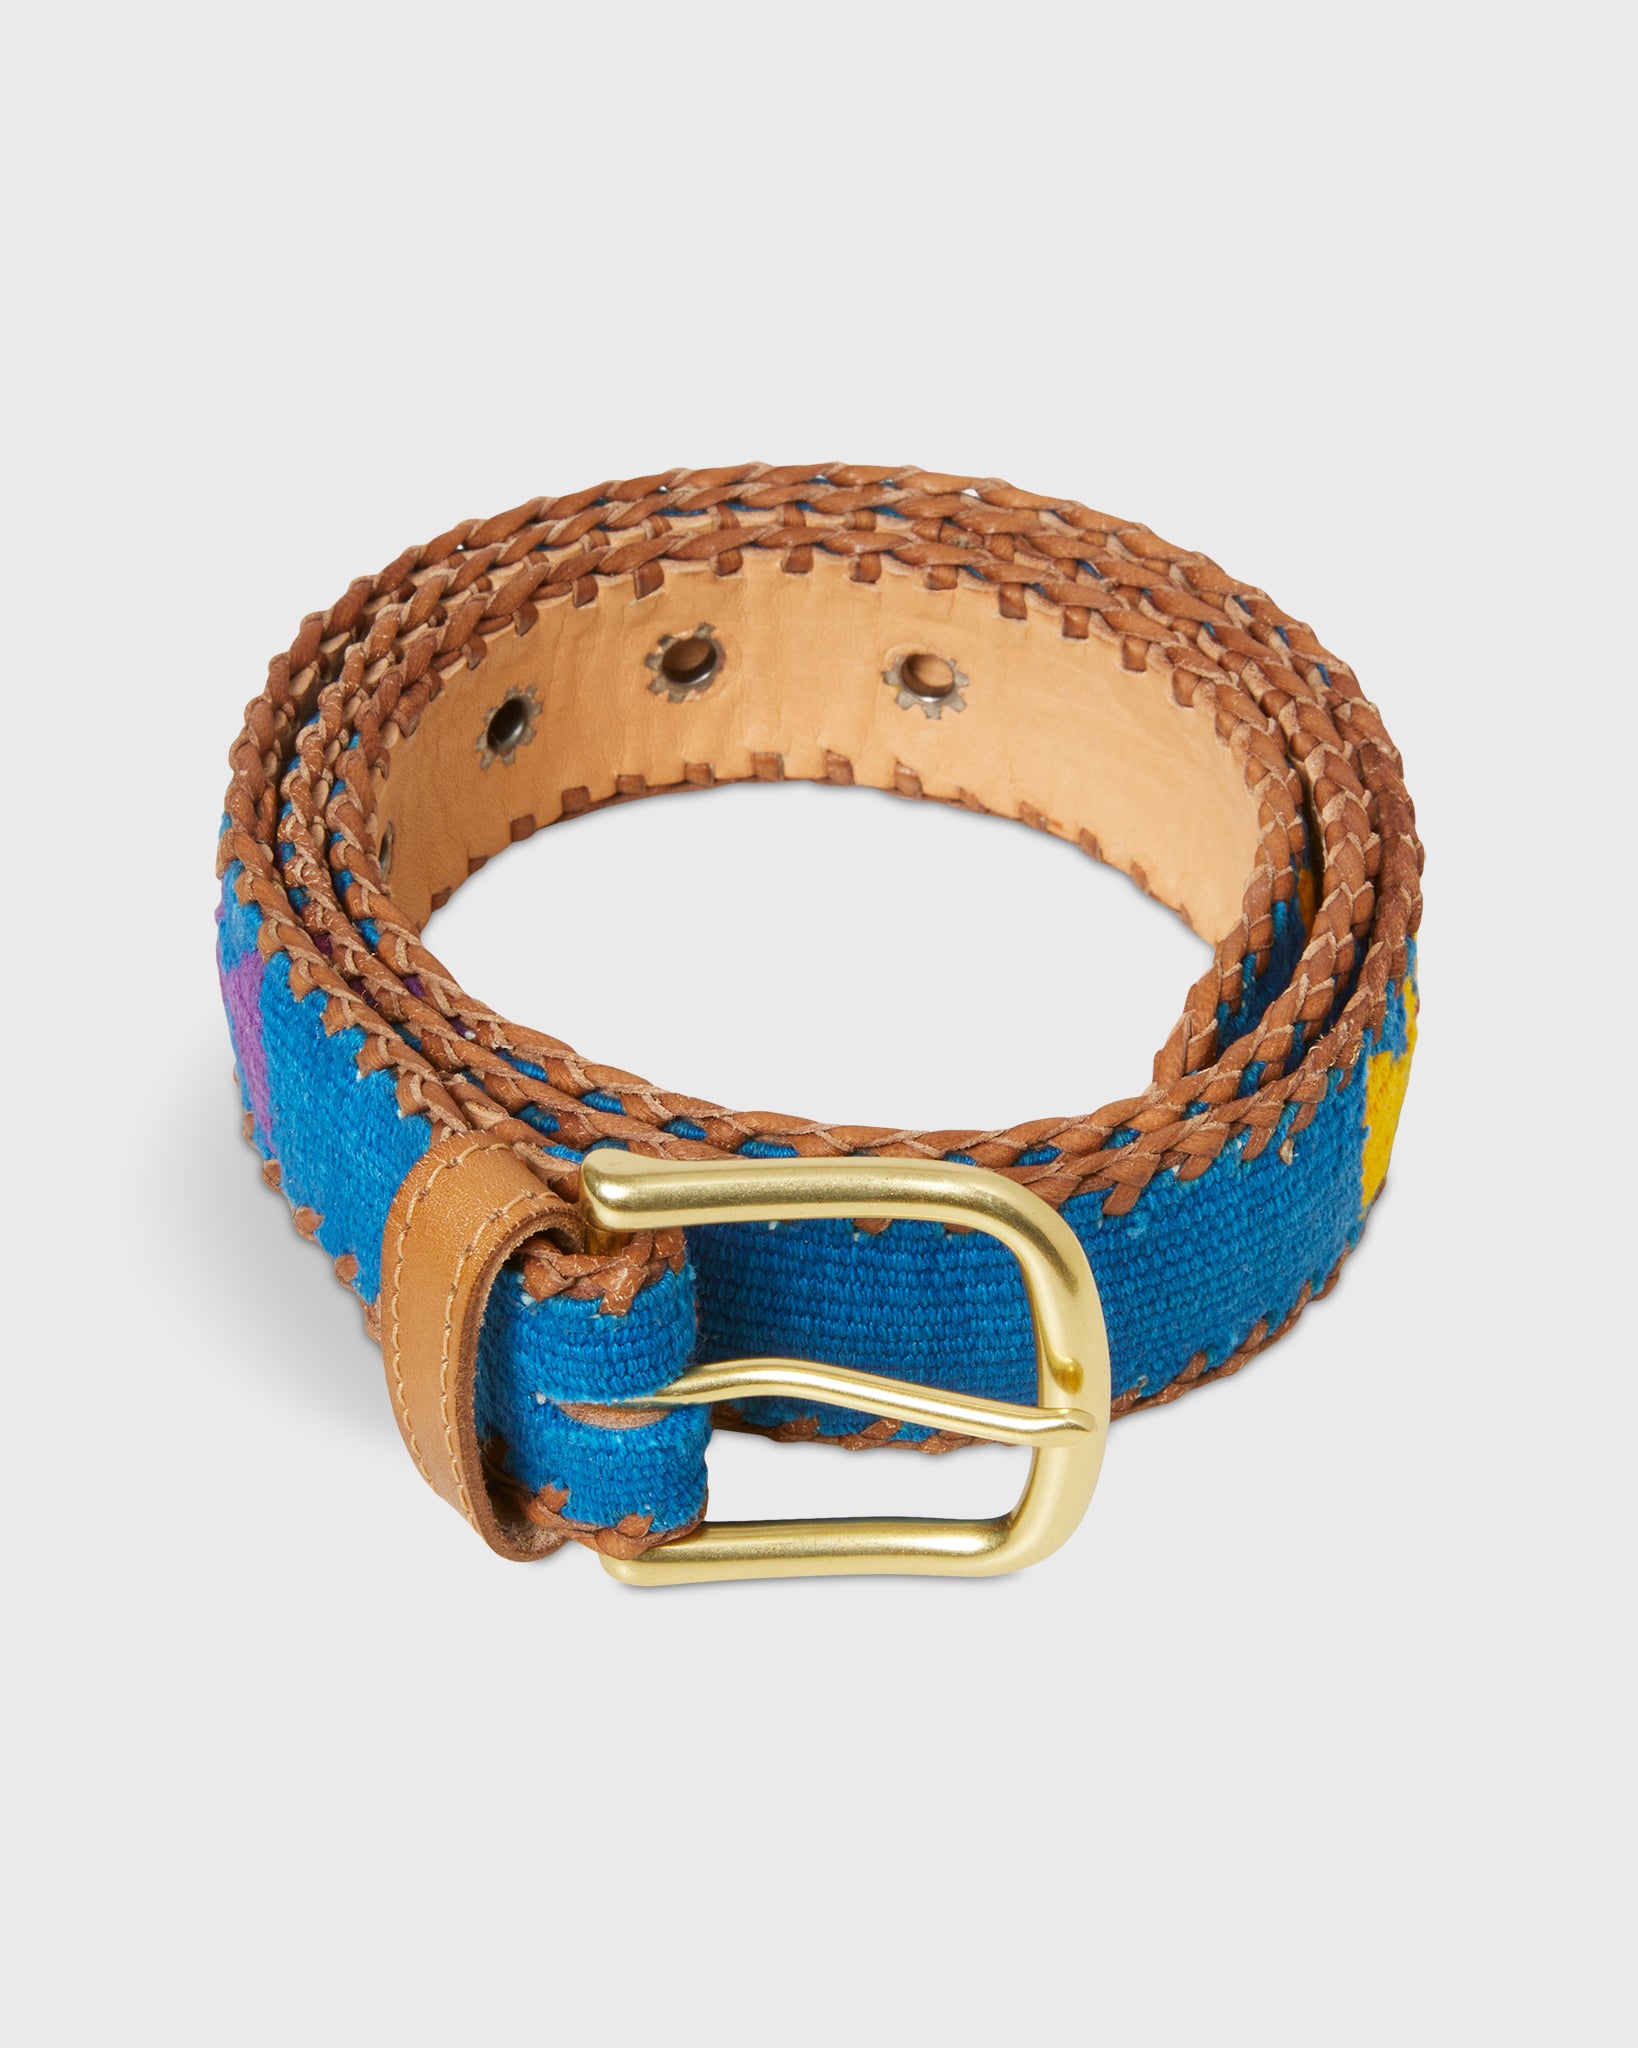 1.5" Hand-Loomed Belt in Blue/Orange Tribal